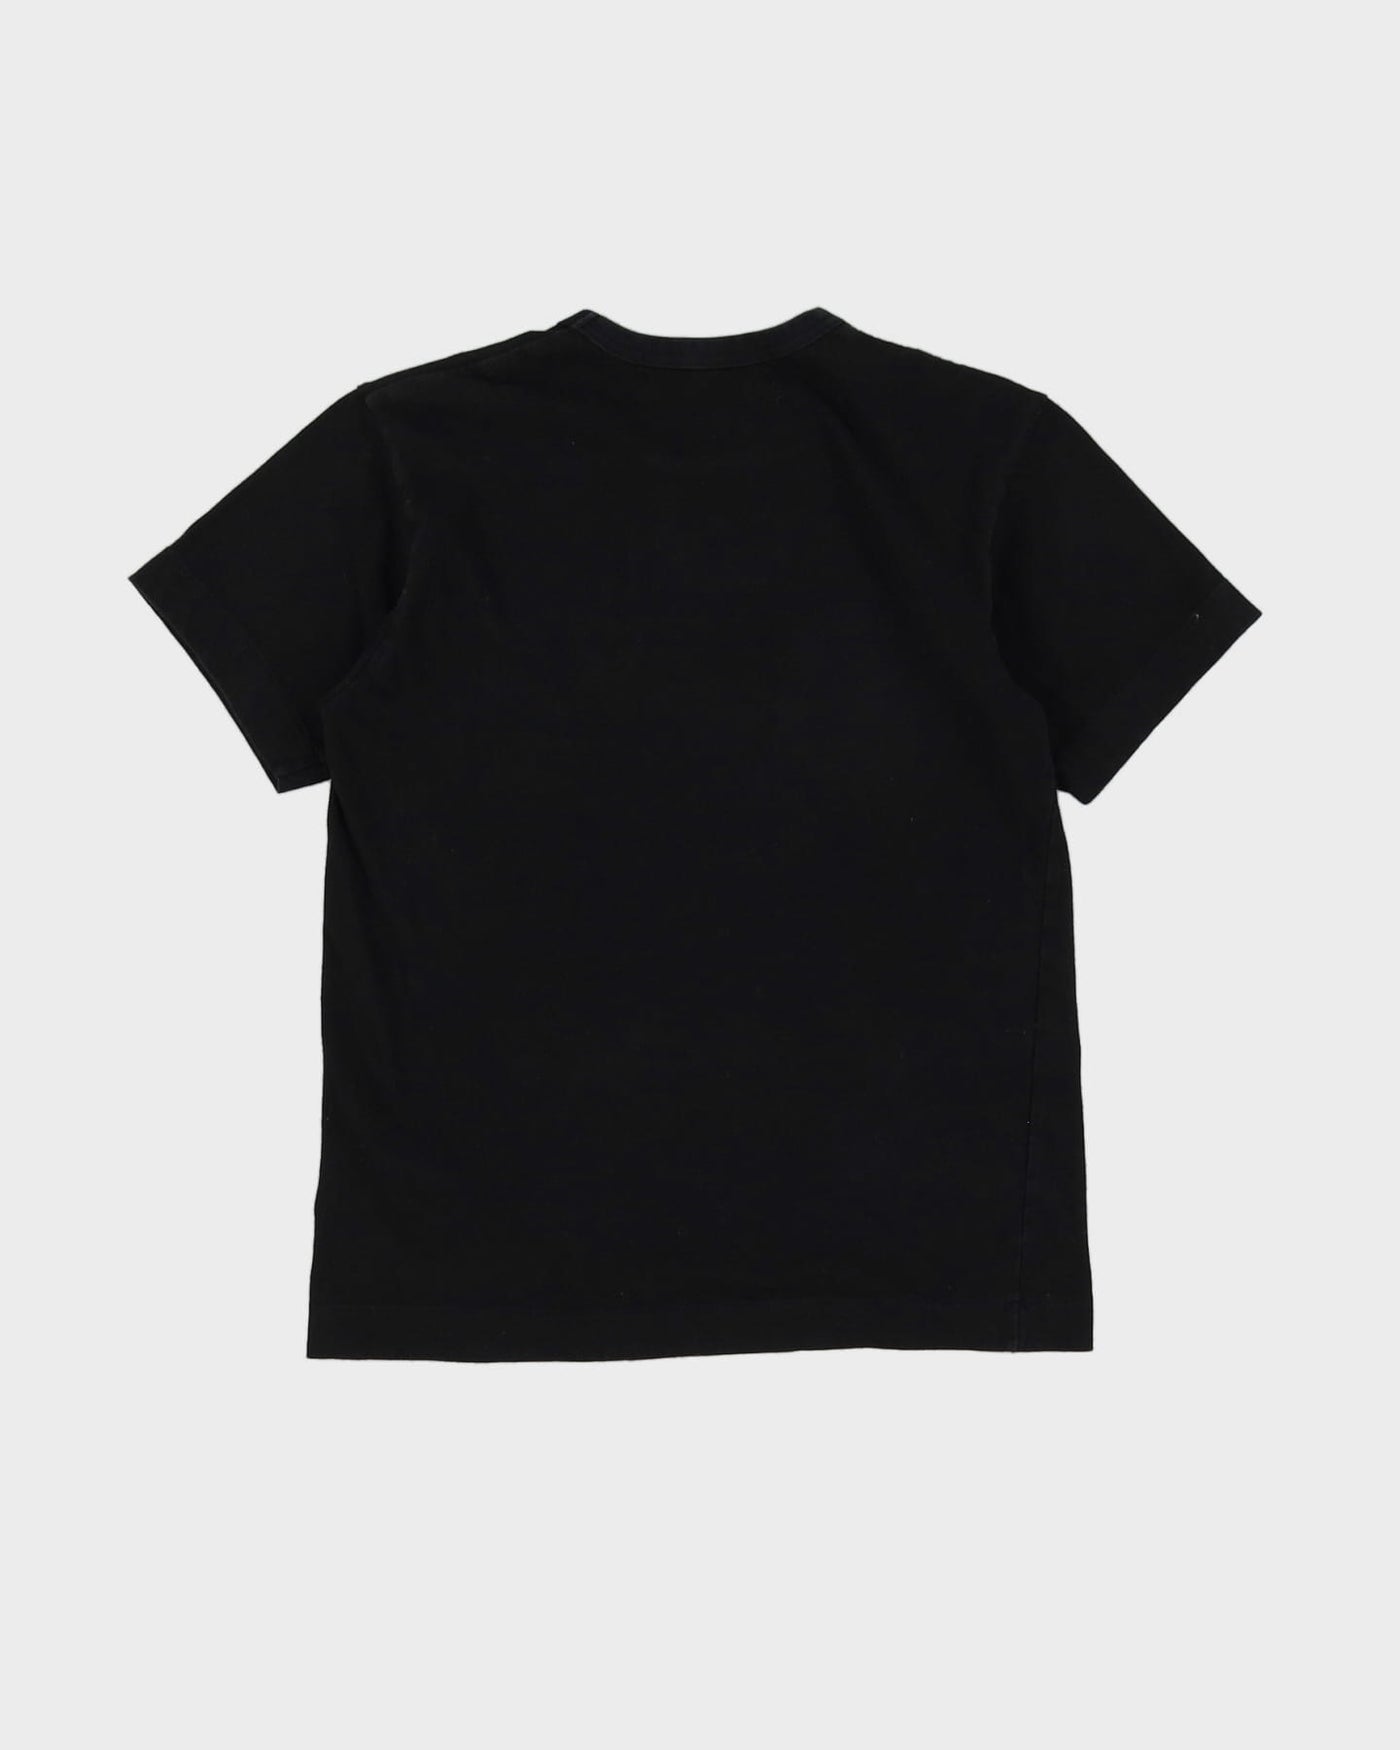 Comme Des Garcons Play Black Heart Design Baby Fit T-Shirt - S